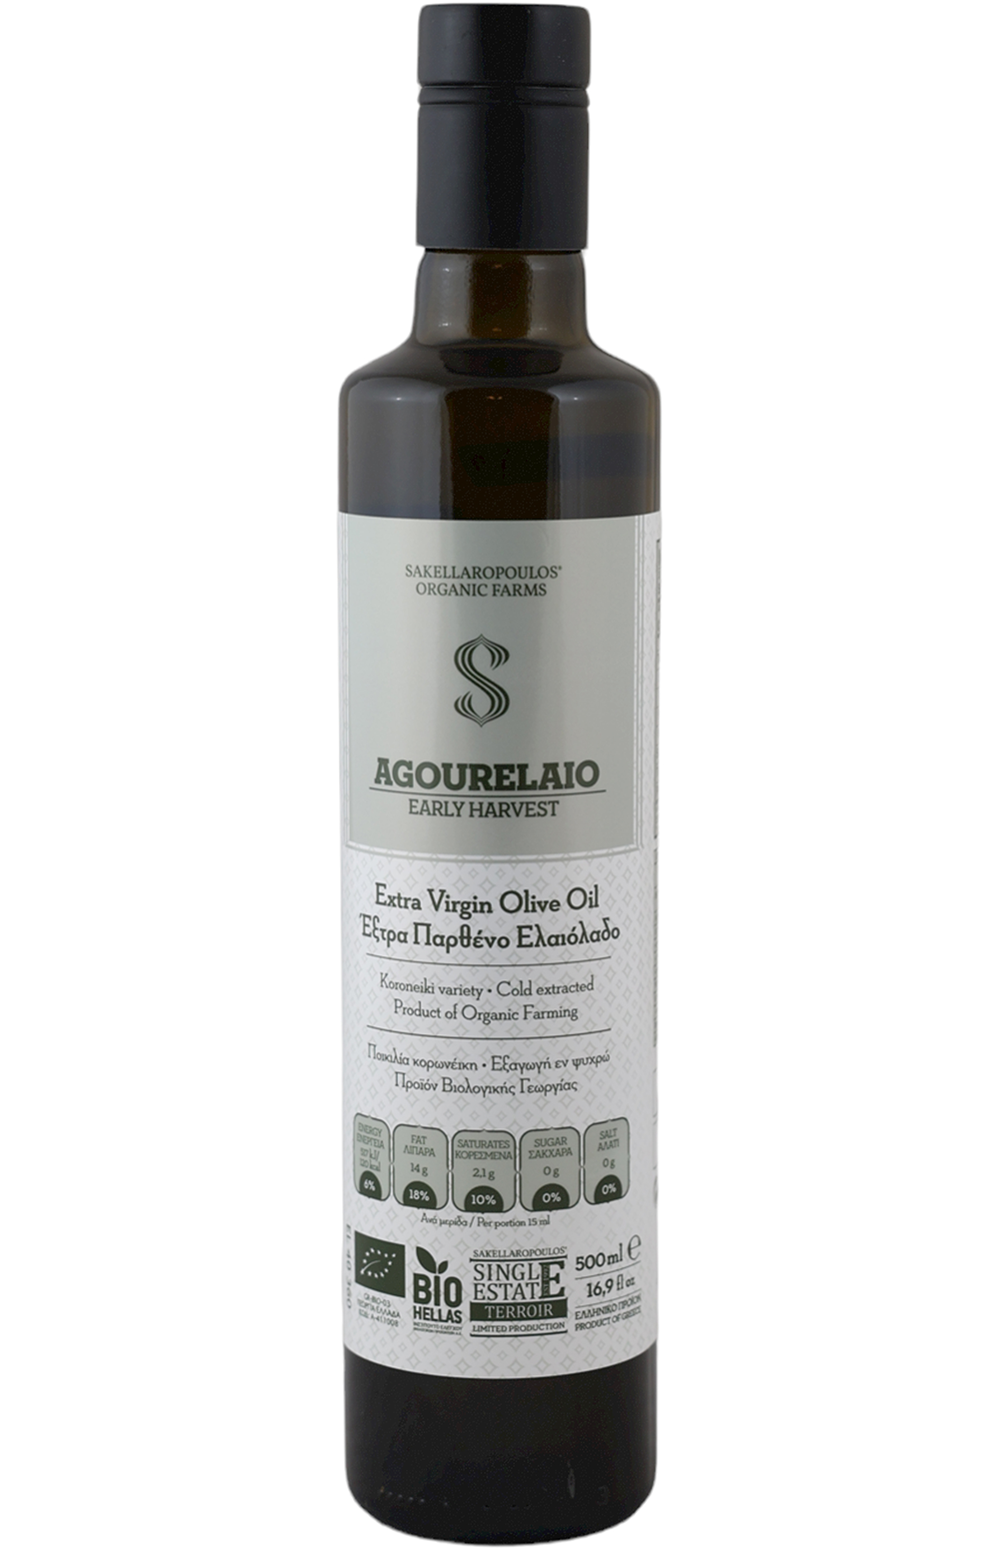 Agourelaio Early Harvest Organic EVOO Olive Oil